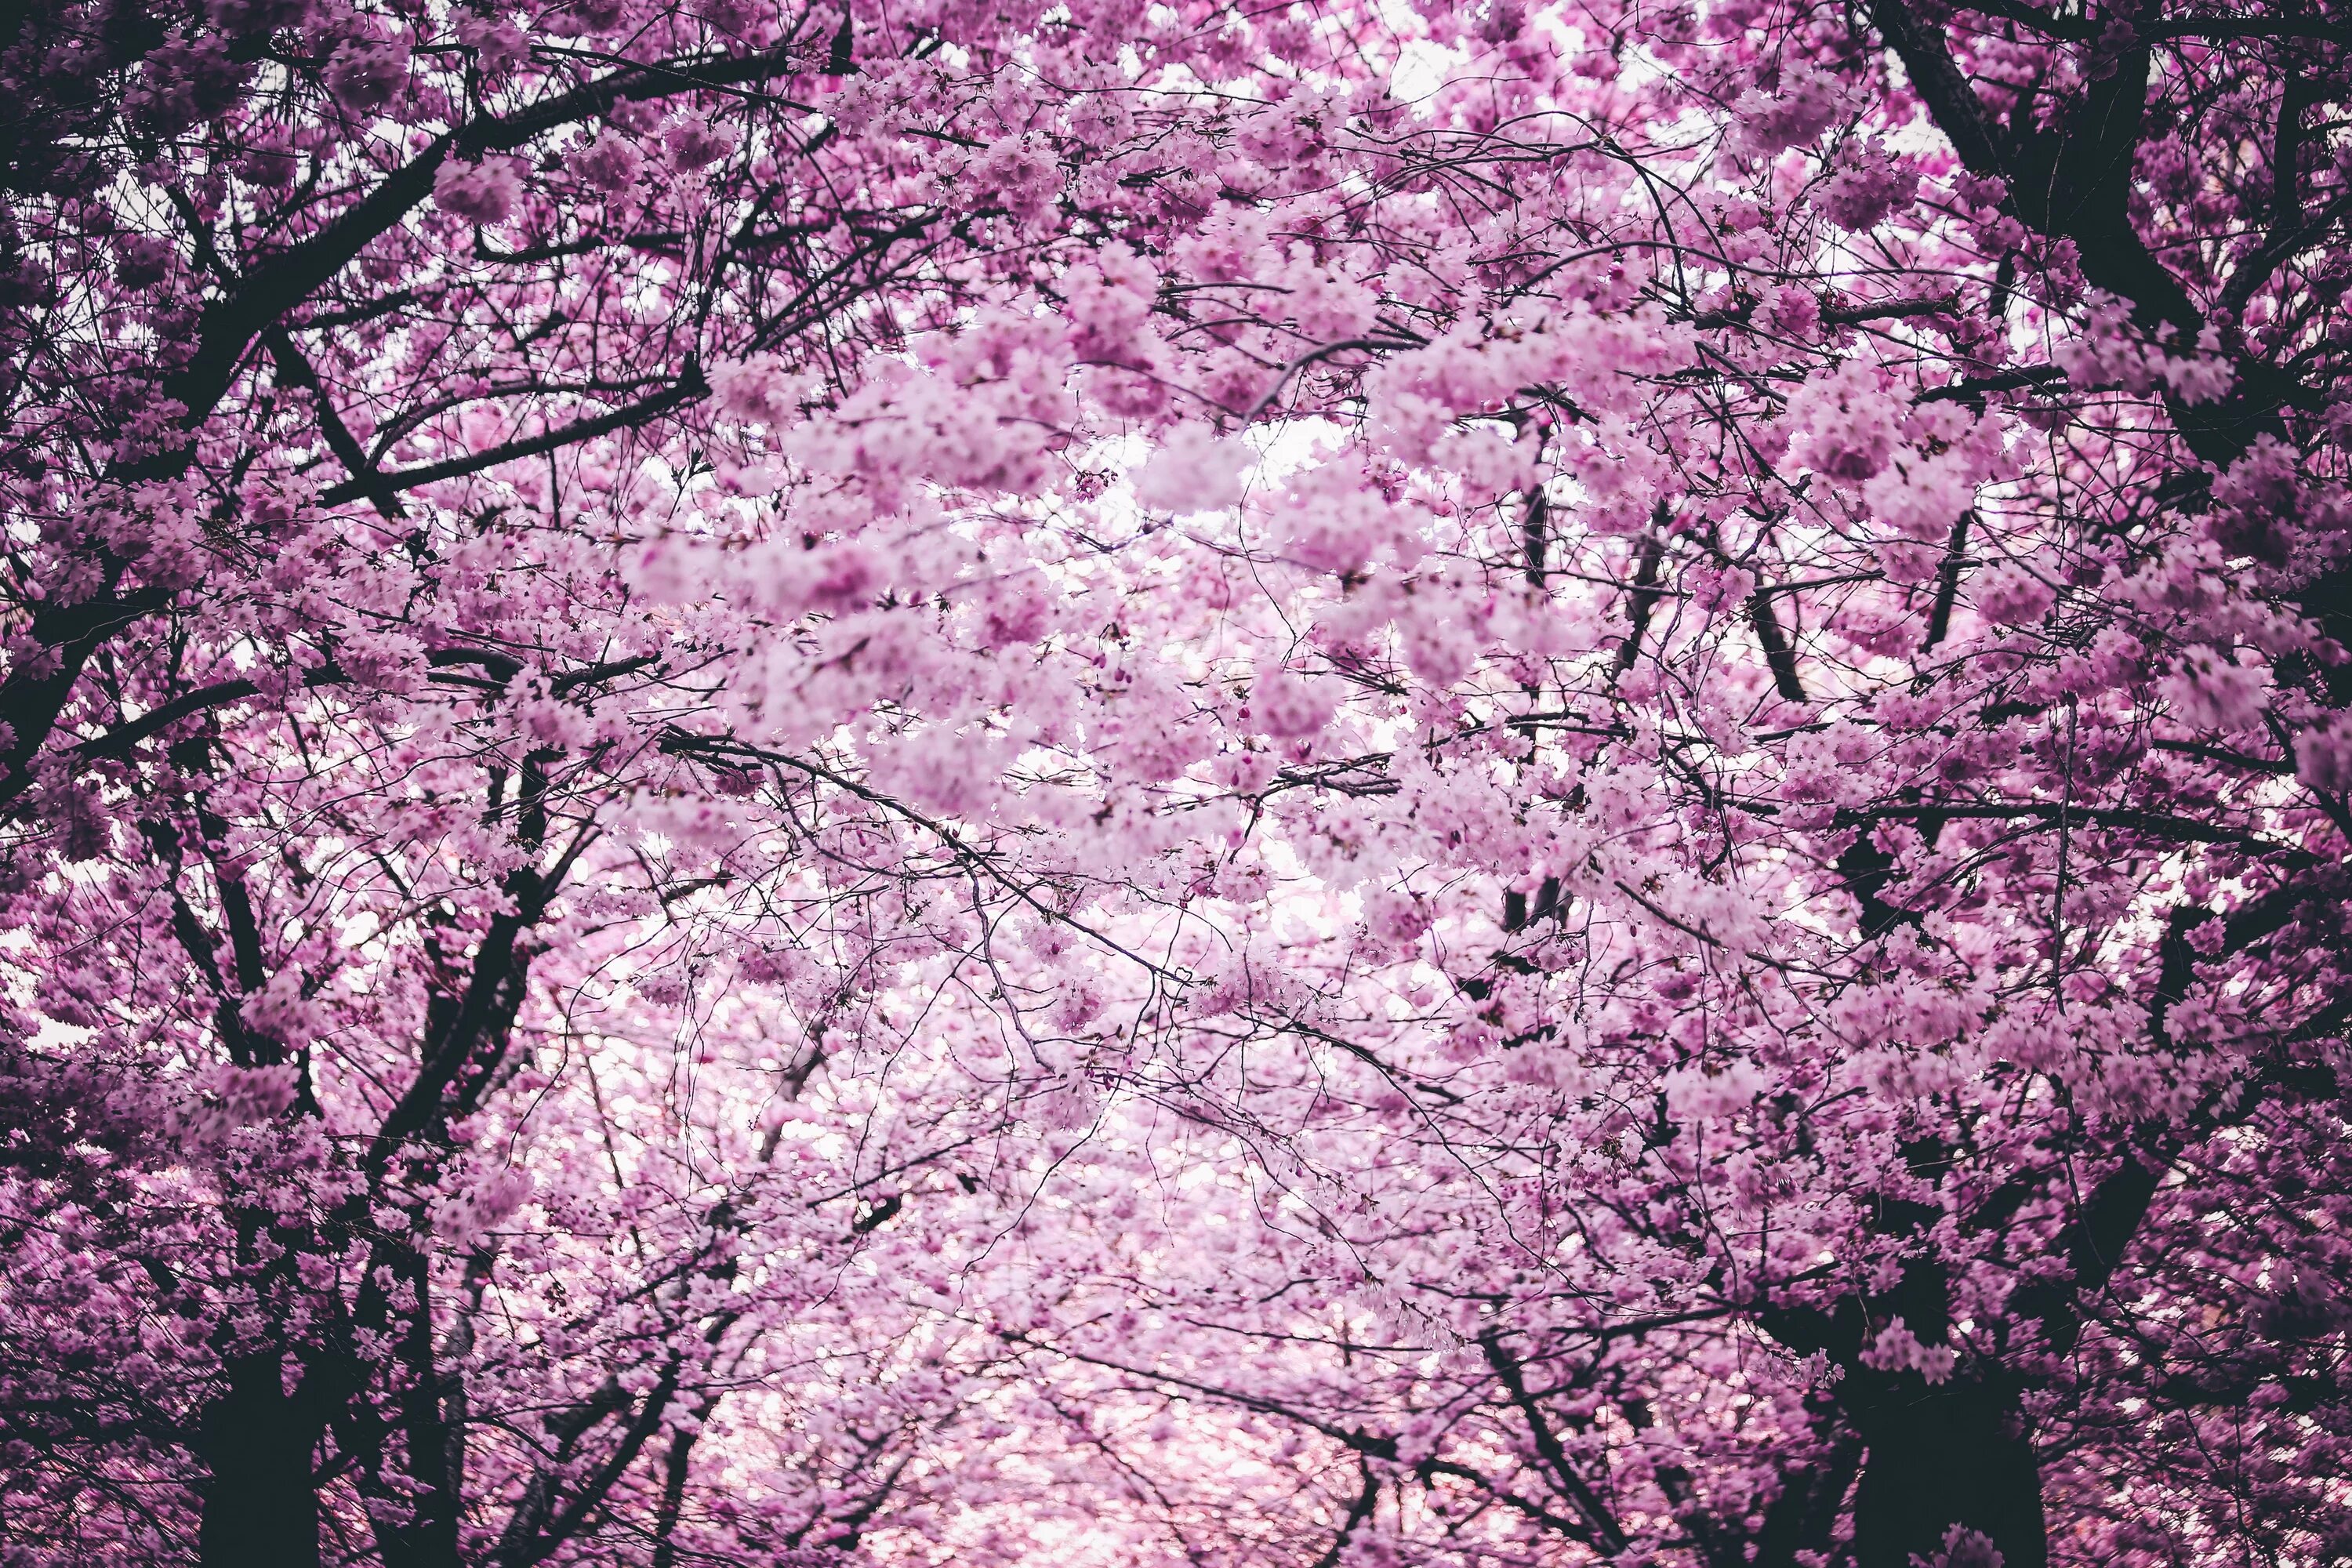 Черри блоссом дерево. Сакура черри блоссом. Сакура черри блоссом дерево. Pink черри блоссом дерево деревья. Sakura blossom